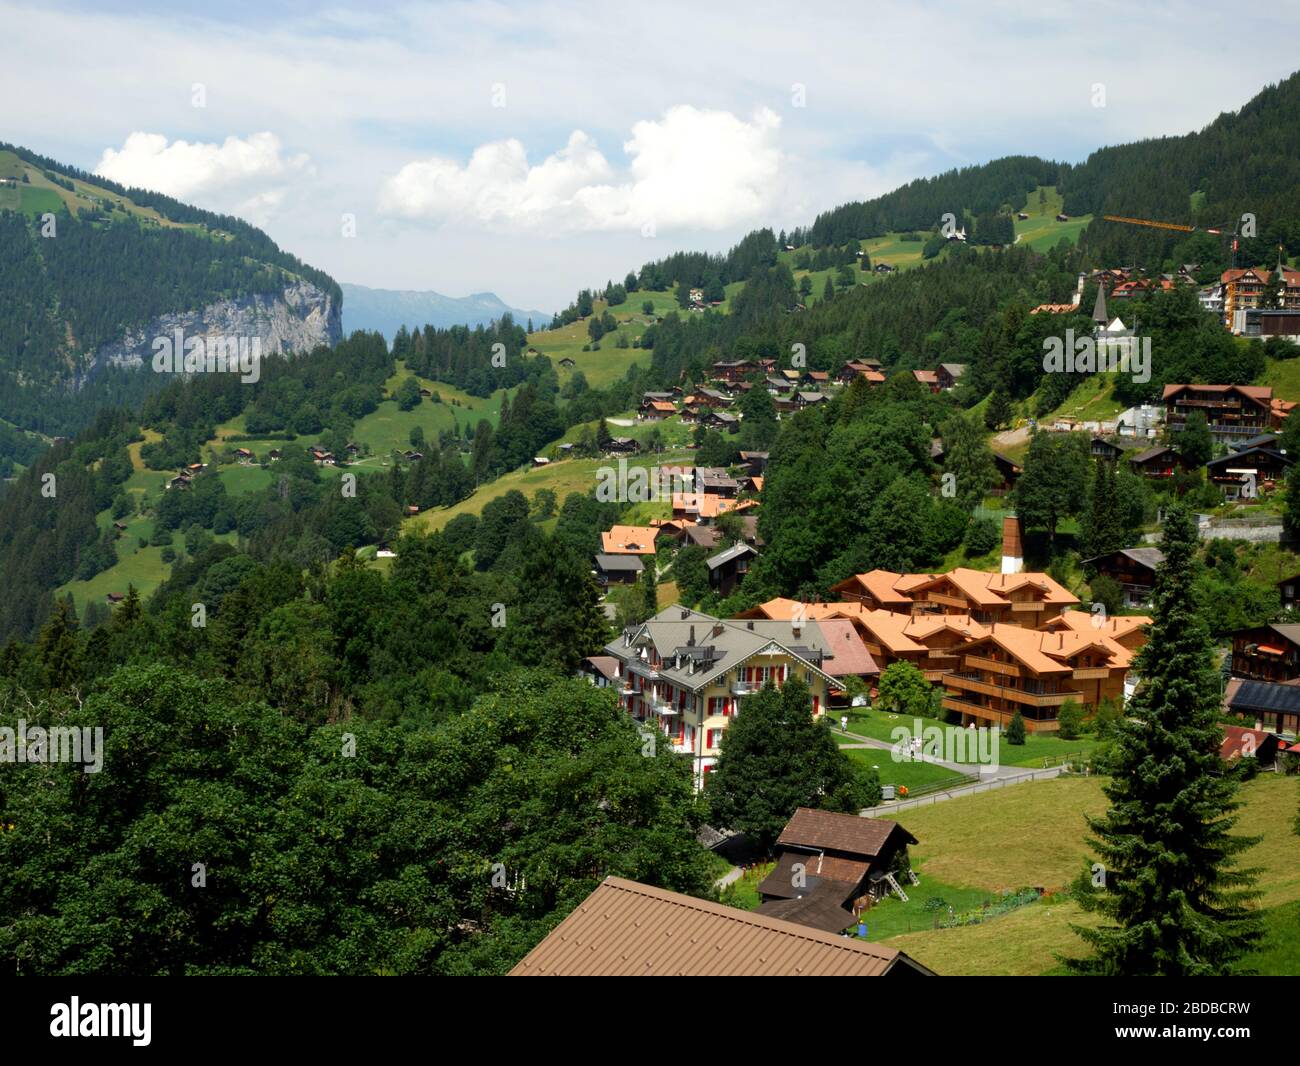 The alpine village of Wengen, in the Jungfrau region of Switzerland. Stock Photo